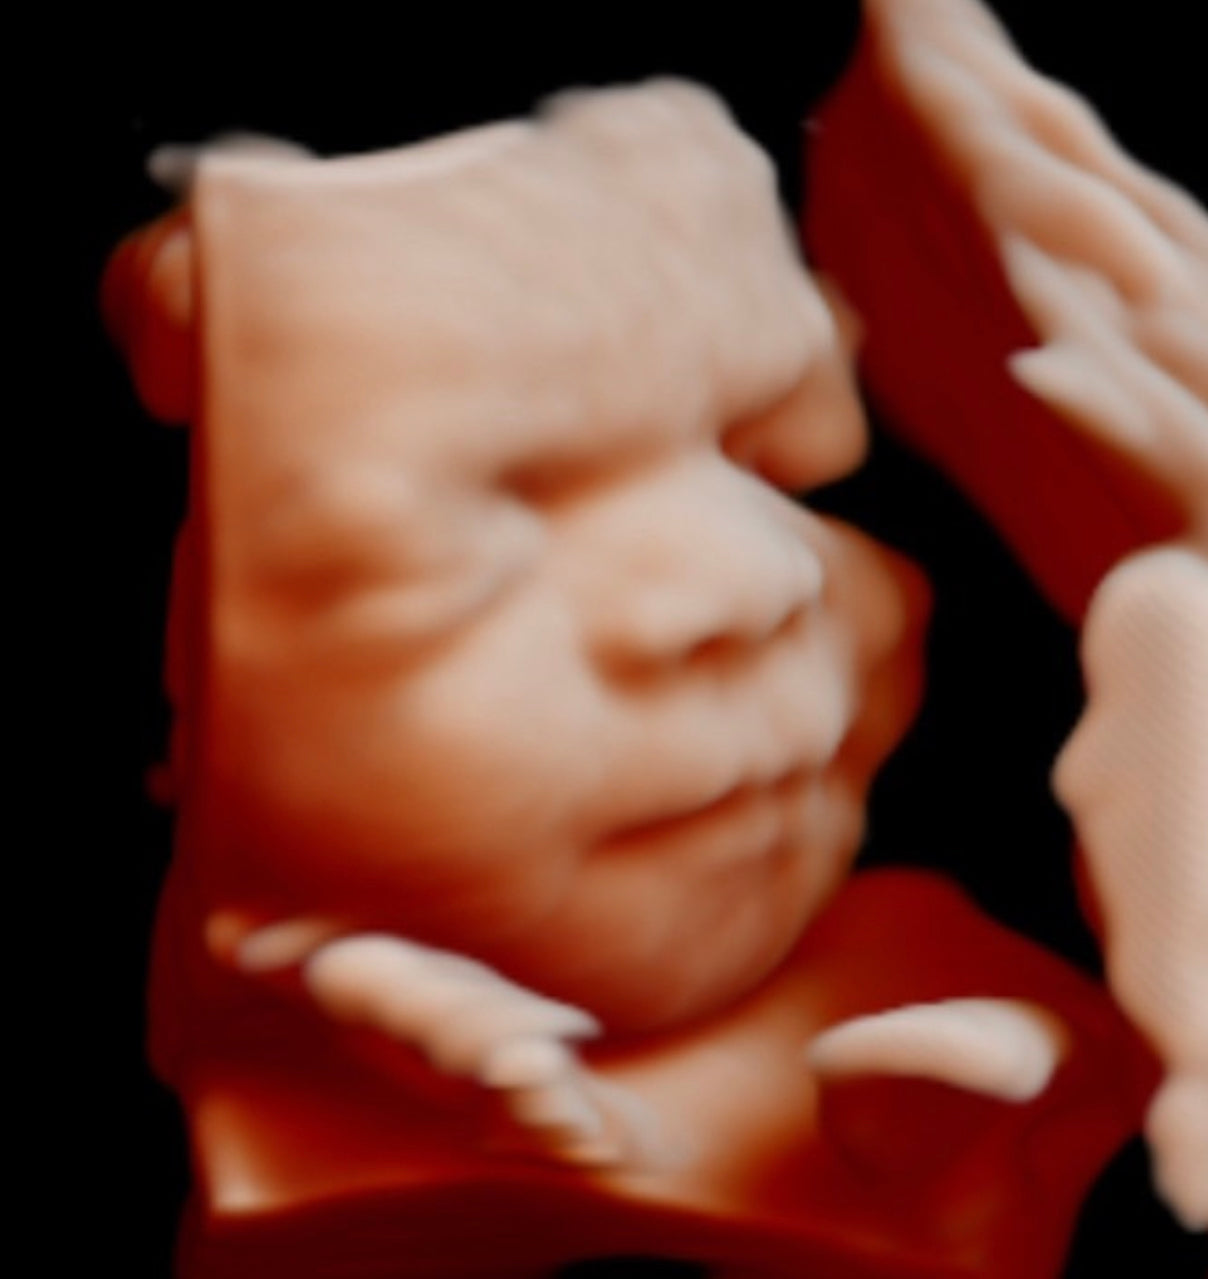 HD Live Ultrasound baby gender